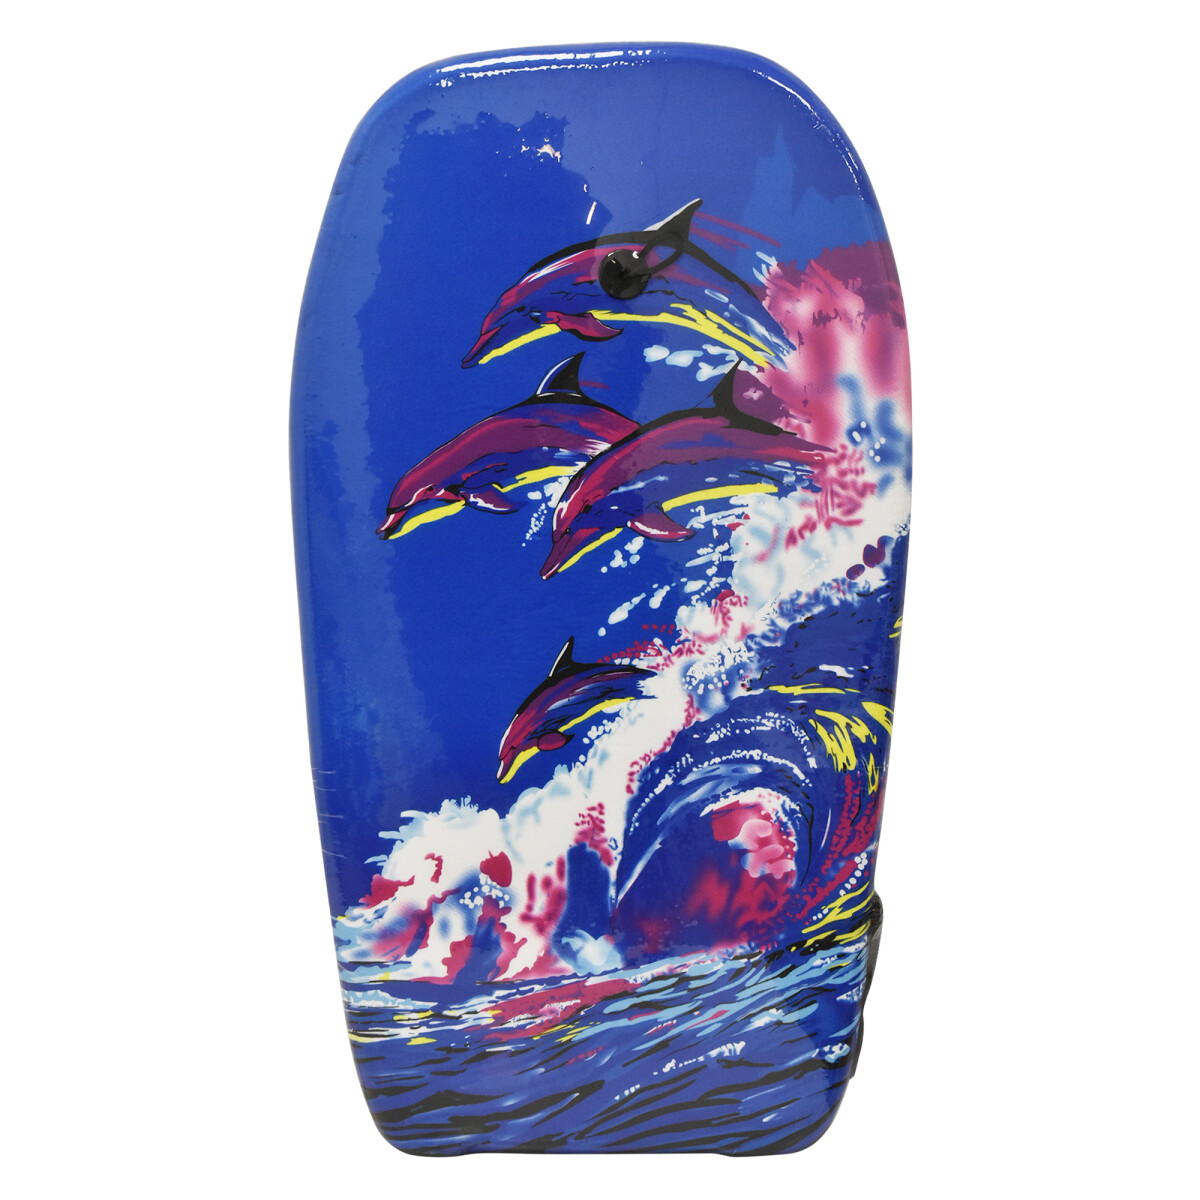 Tabla Morey Bodyboard Barrenadora Olas Surf Flotador 82Cm - Violeta 